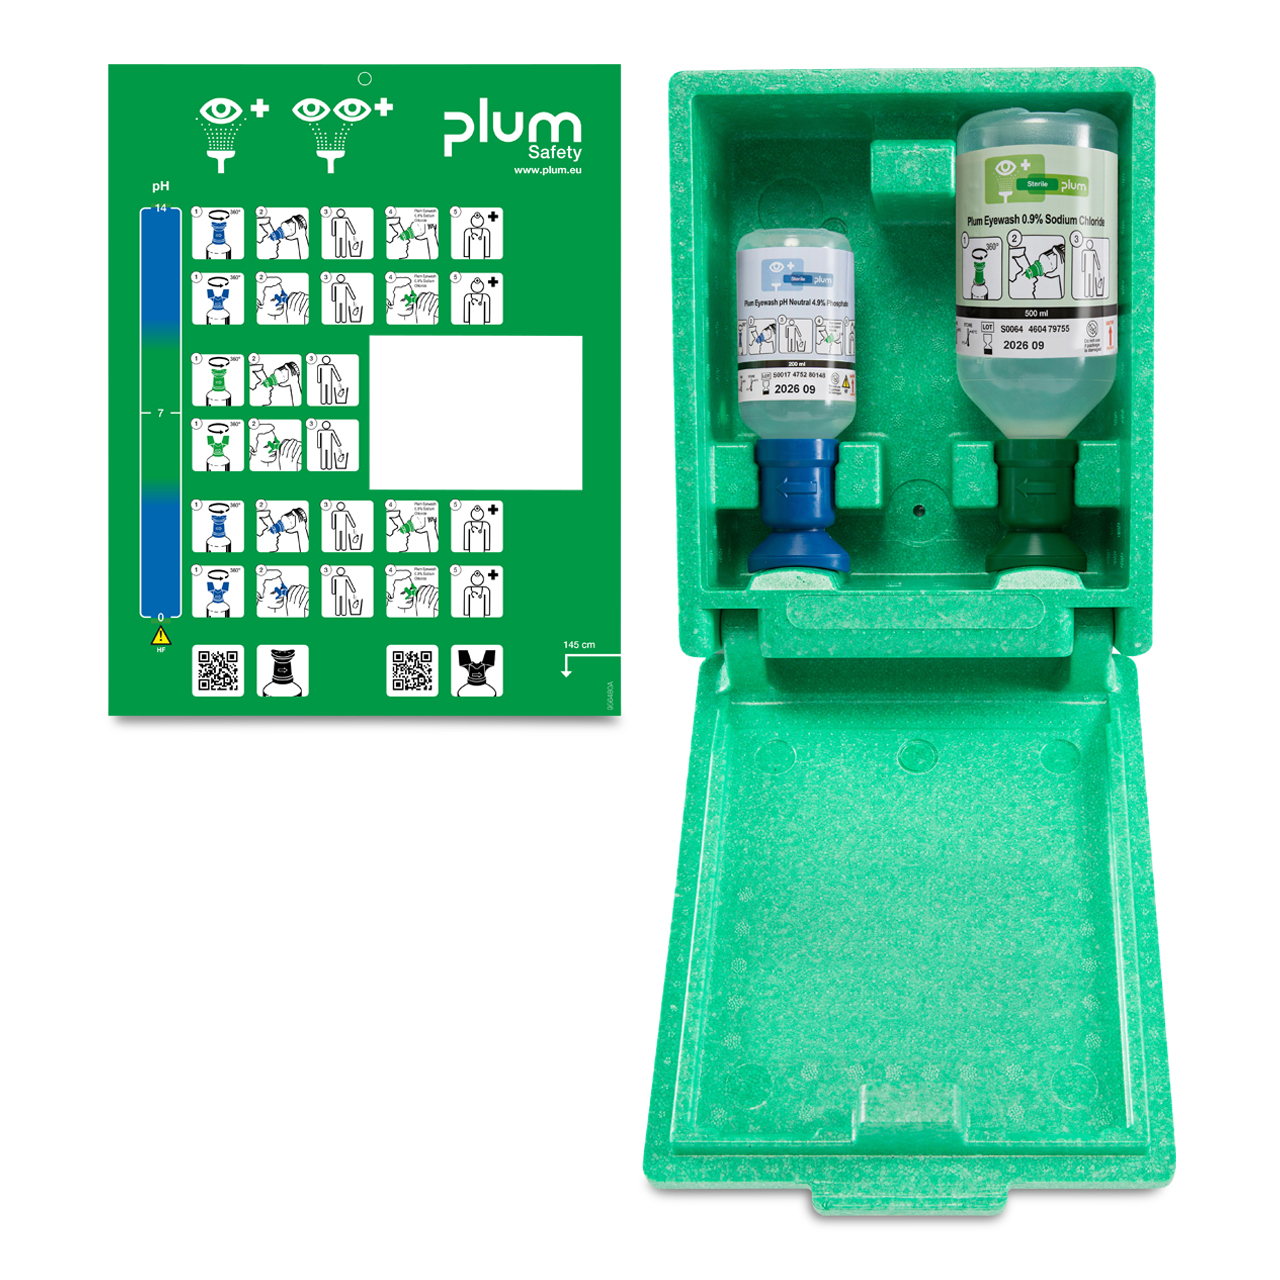 PLUM Augenspülstation pH Neutral 200 ml/NaCl 500 ml Wandbox